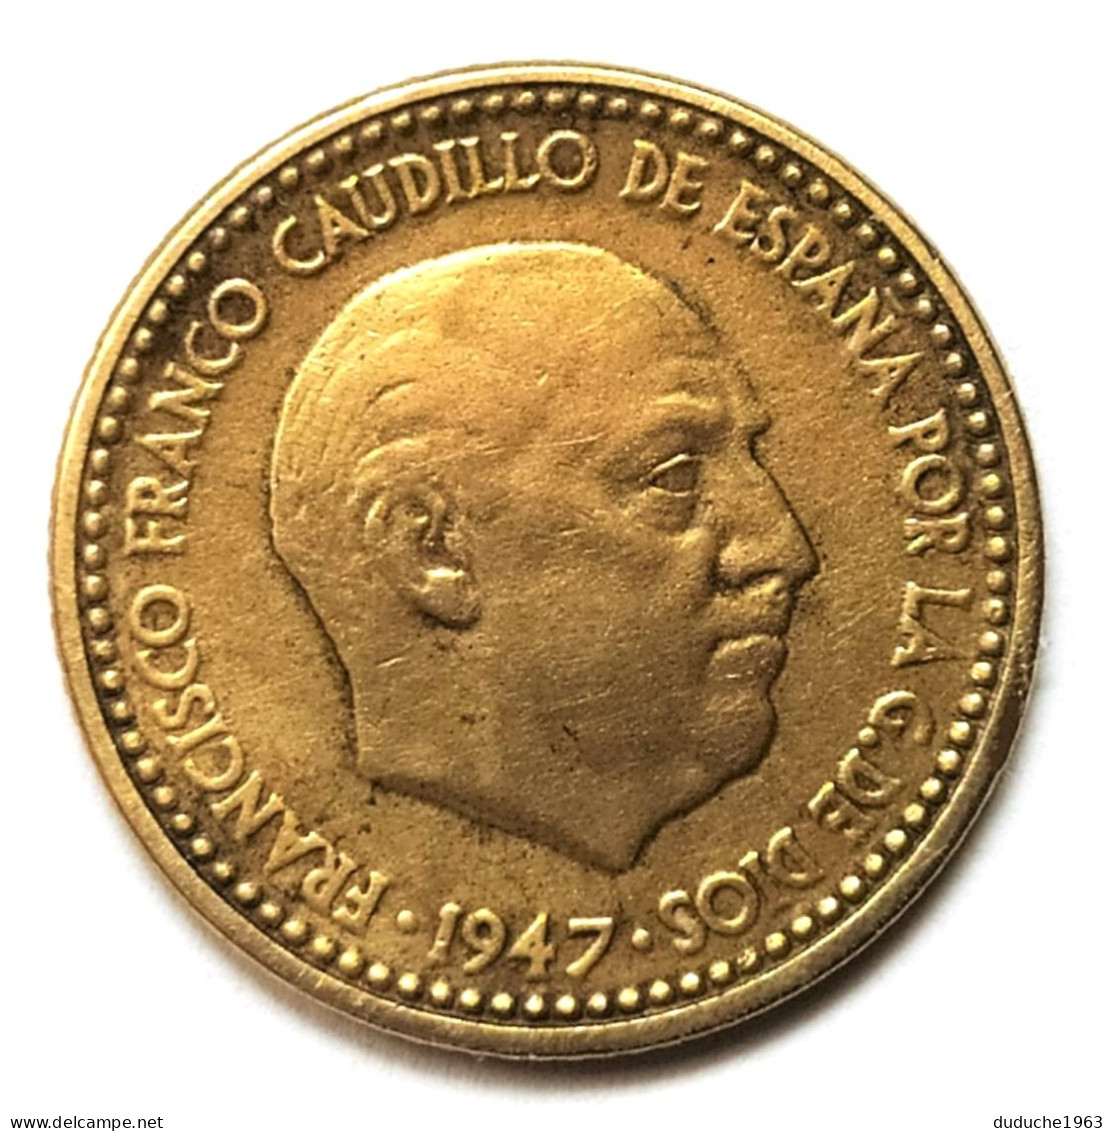 Espagne - 1 Peseta 1947 - 1 Peseta